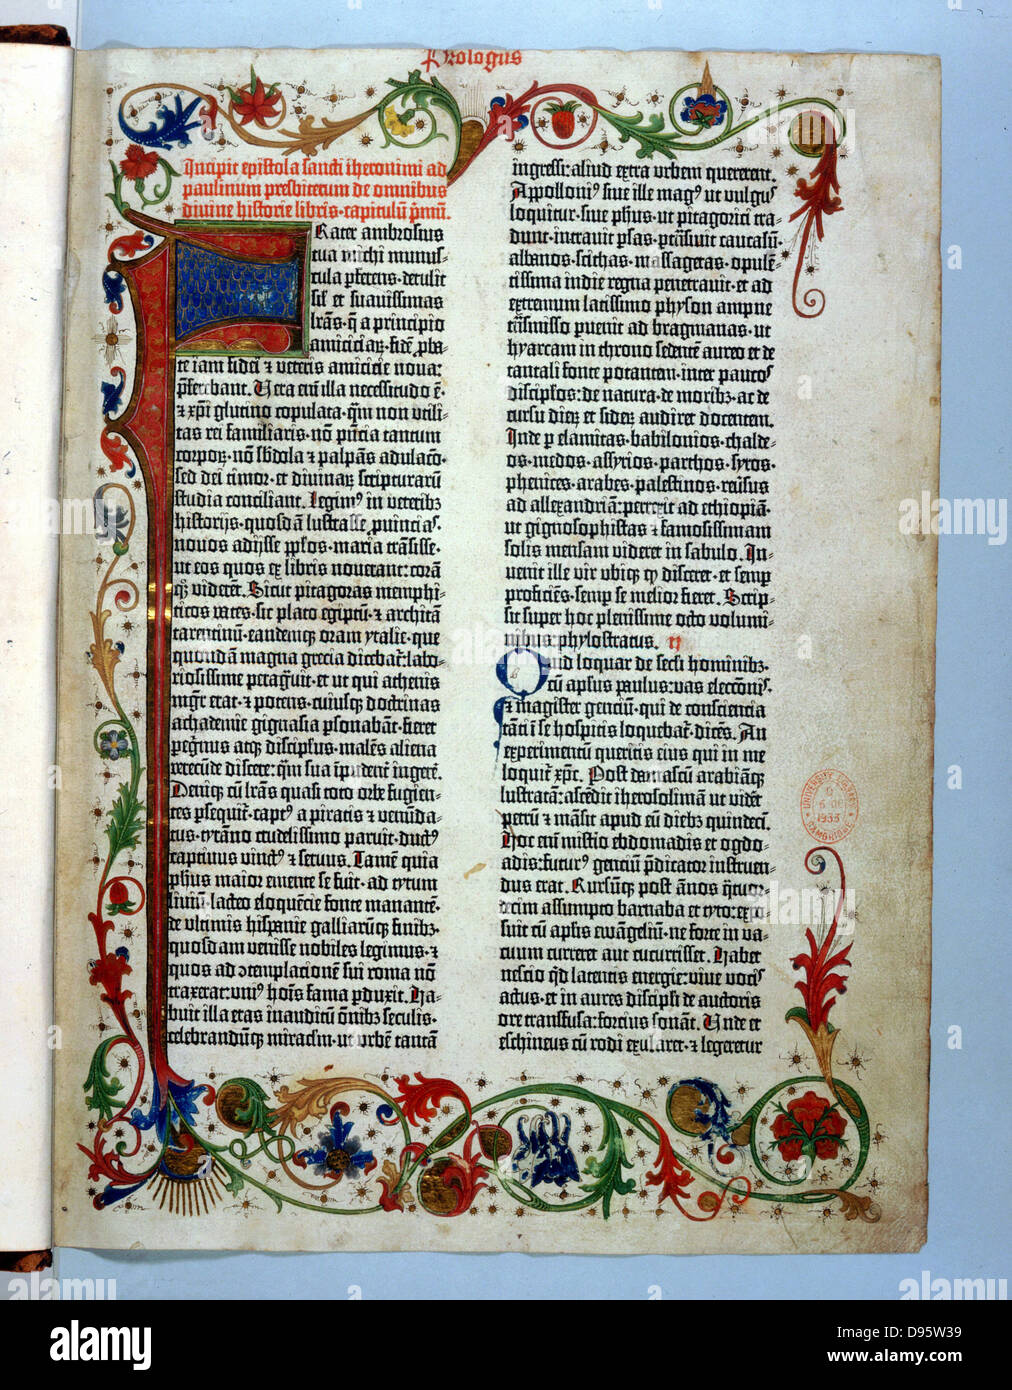 Página de la 'Biblia' impreso por Gutenberg, 1456. Borde iluminado típico de un manuscrito. Foto de stock